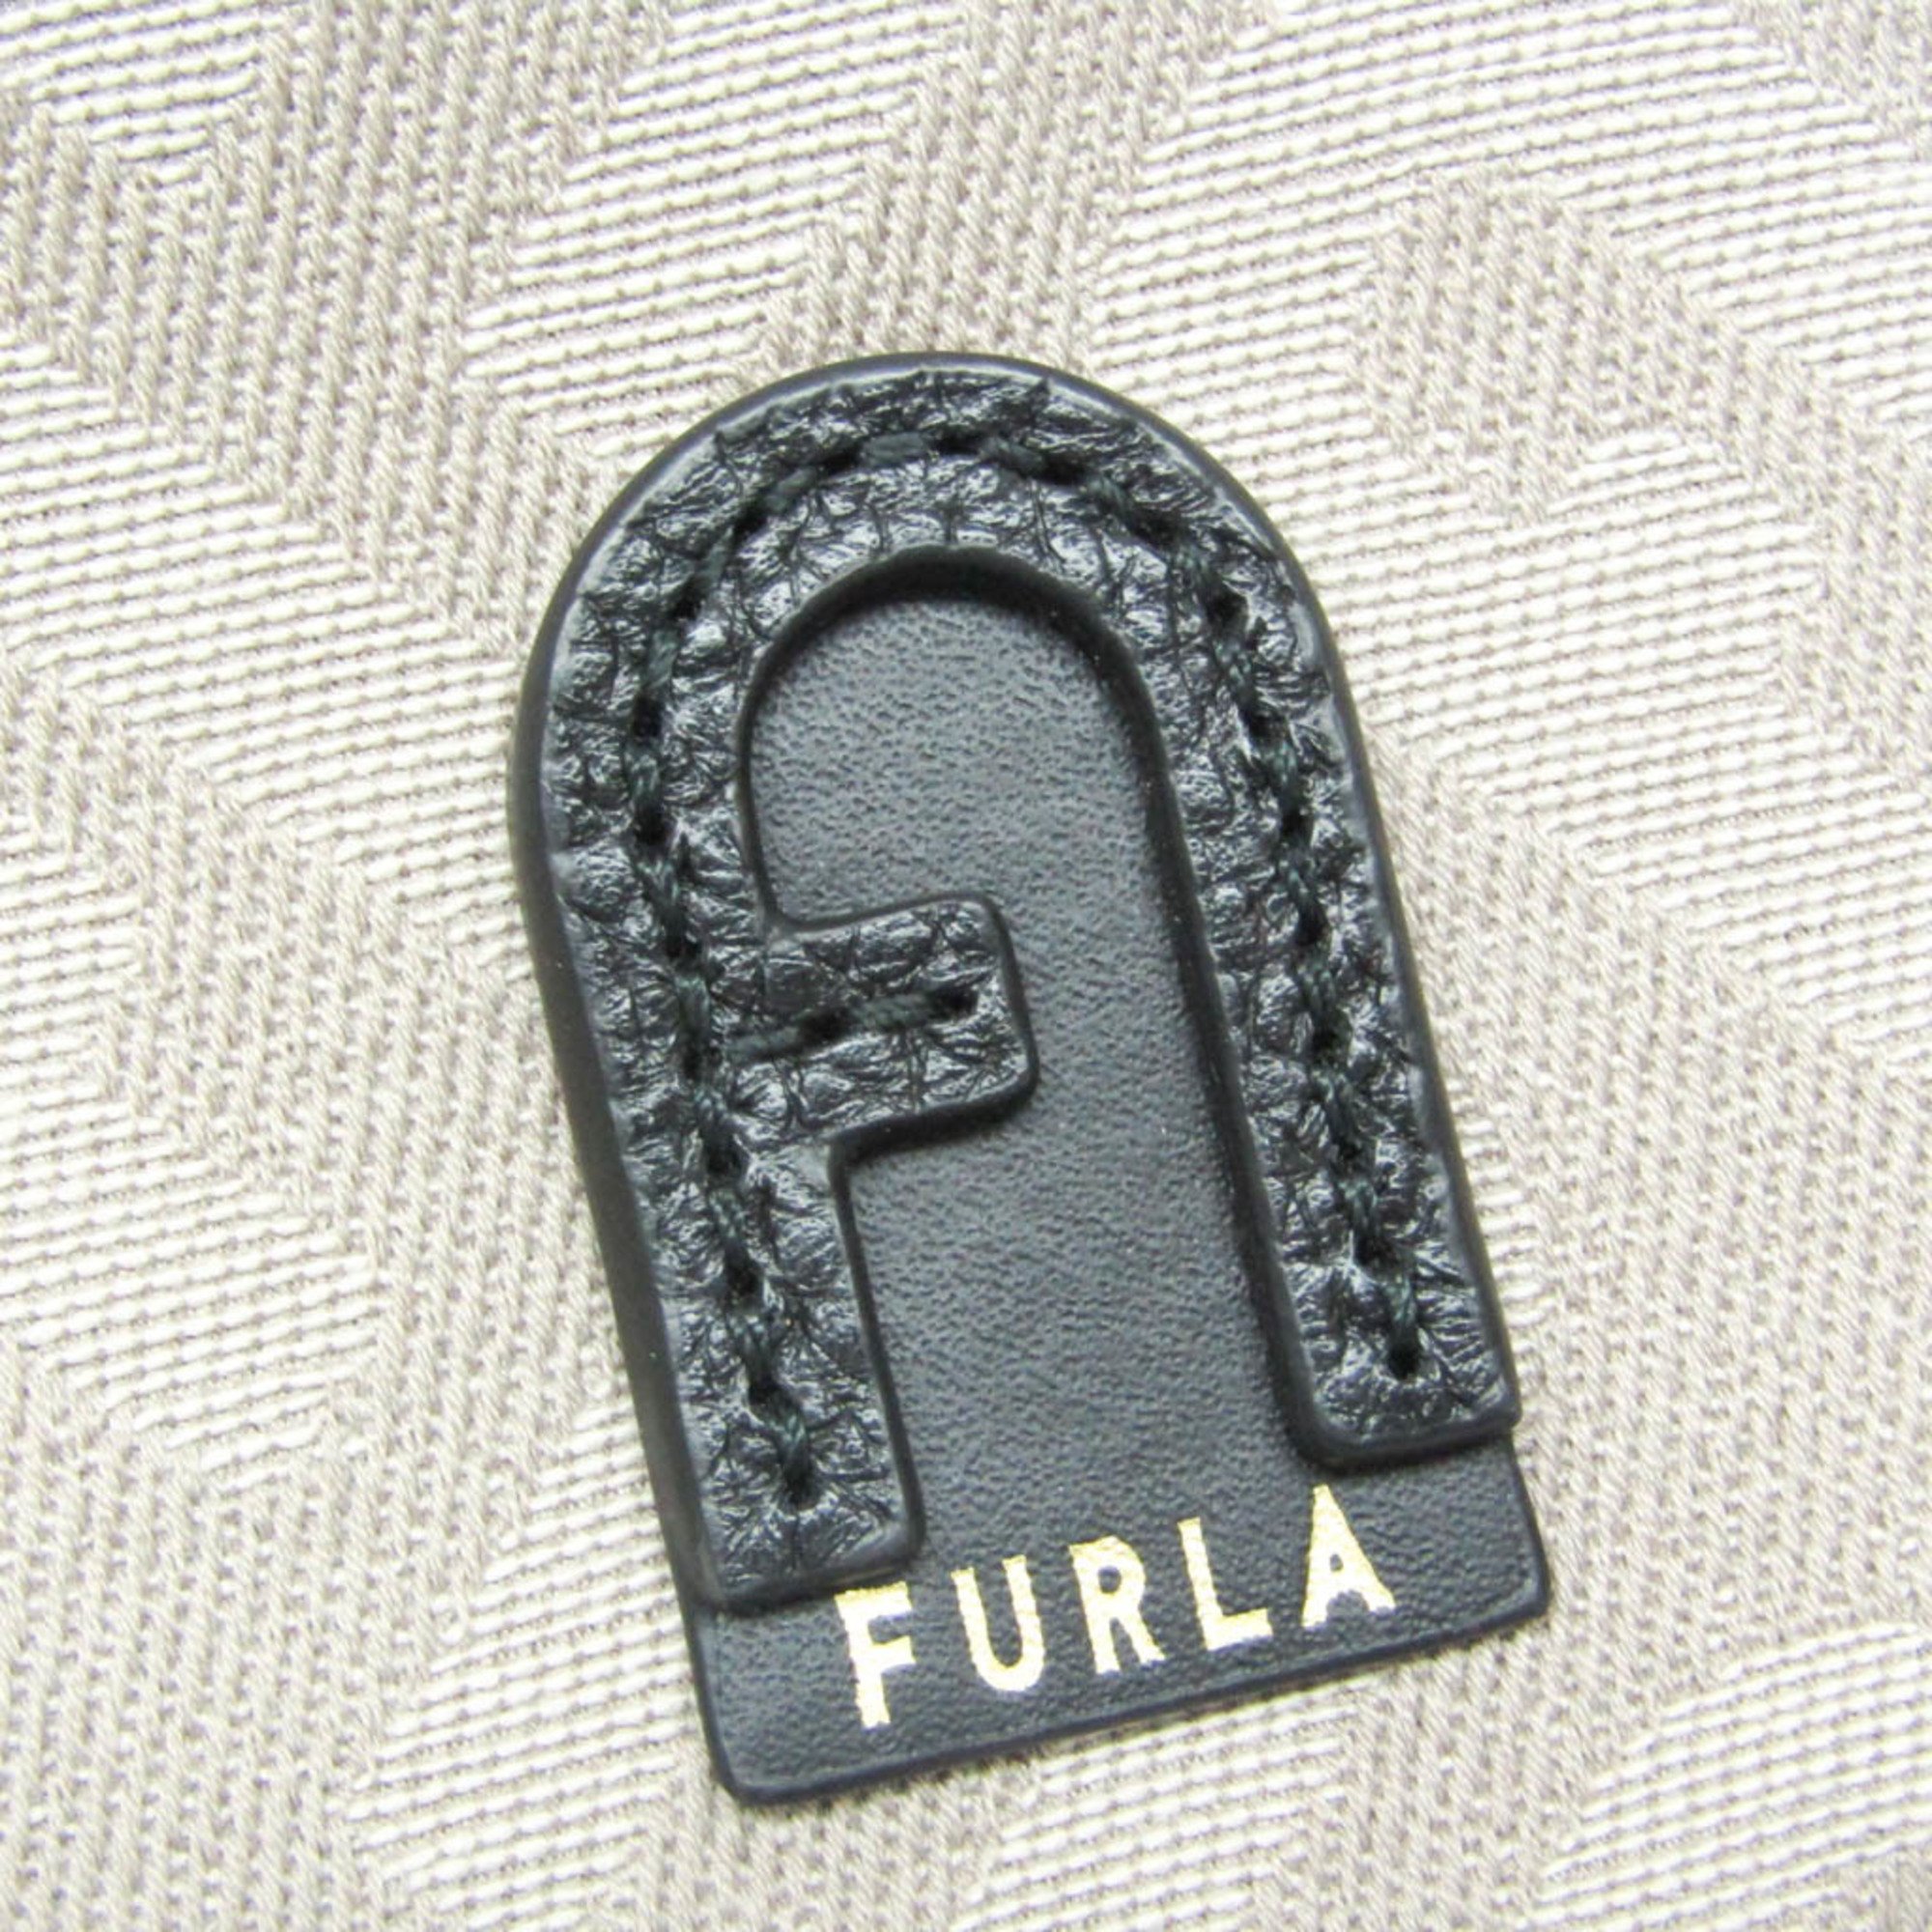 Furla ATENA S WB00397 Women's Leather,Canvas Shoulder Bag Black,Grayish